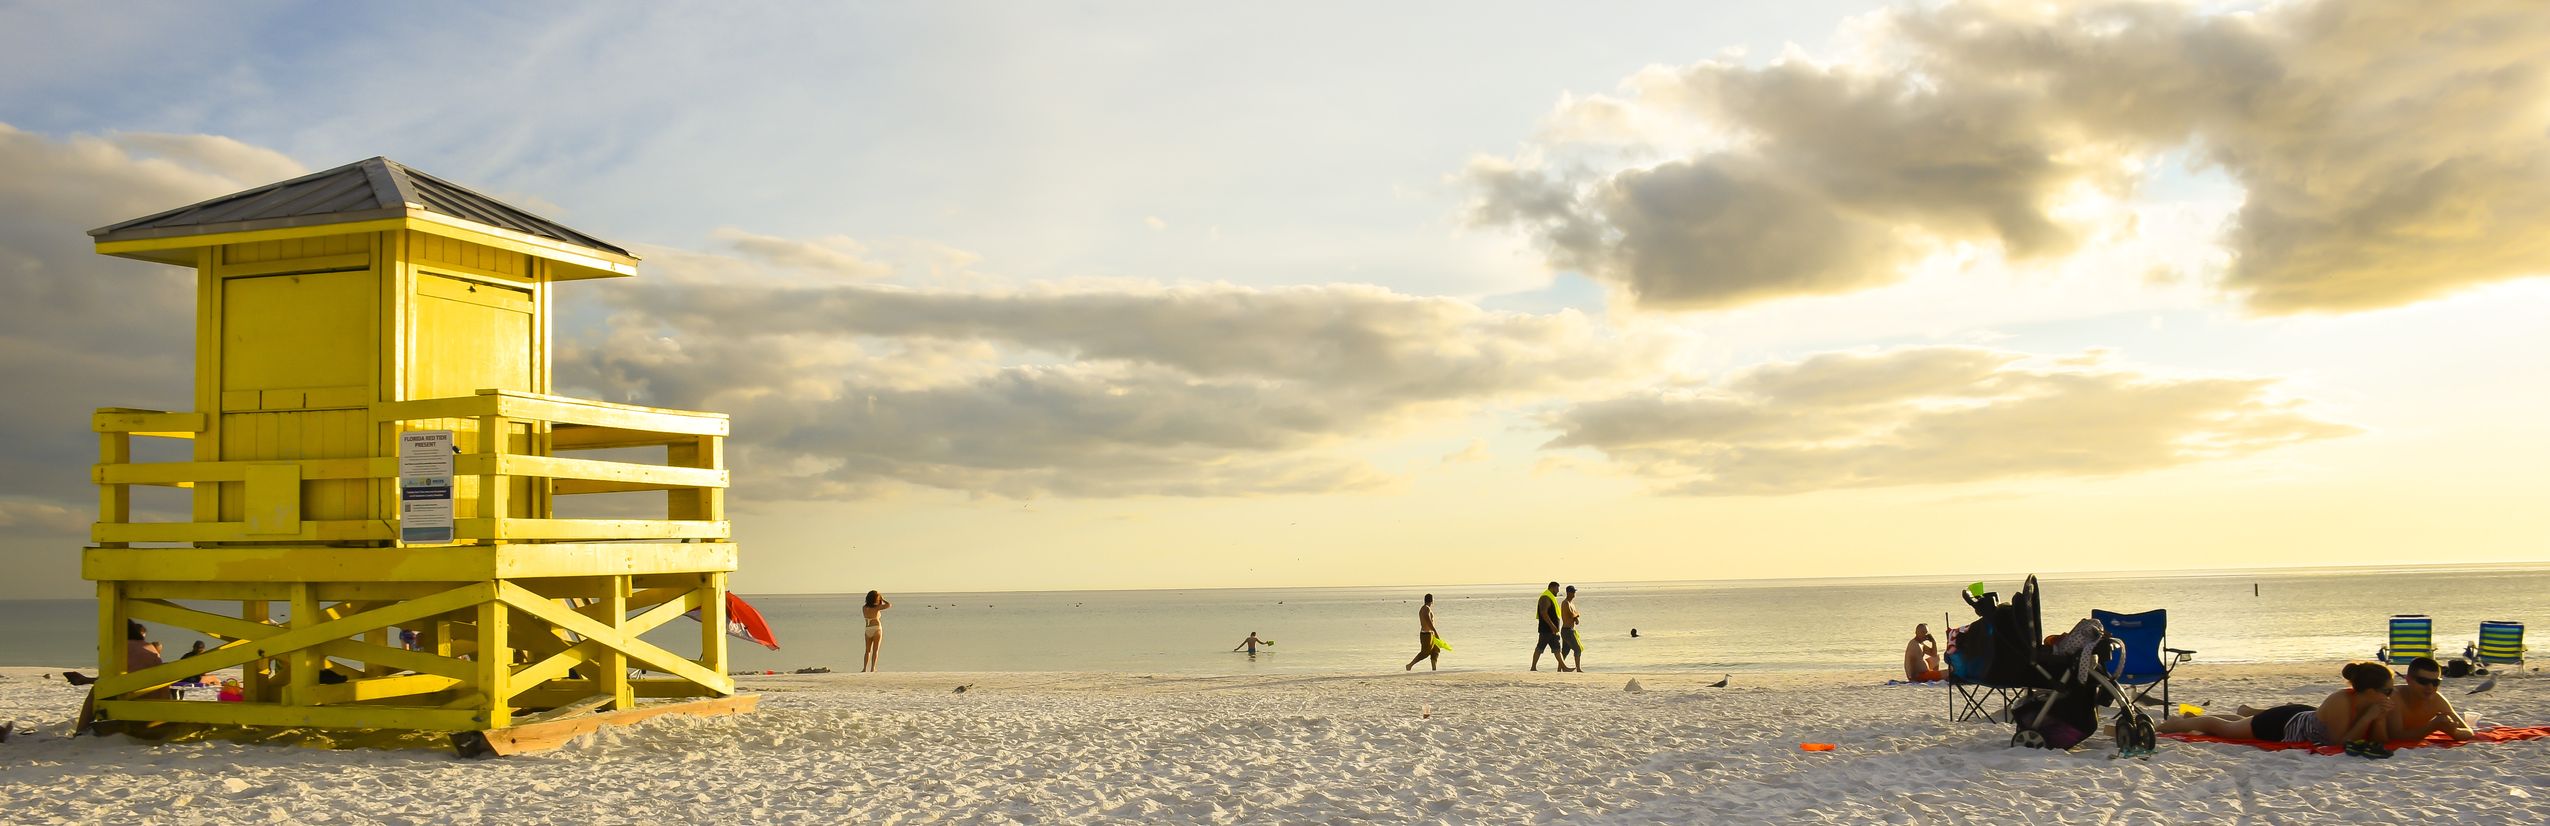 Florida mit Kindern individuell - Florida for family individuell - Sun & Fun in Florida mit Kindern